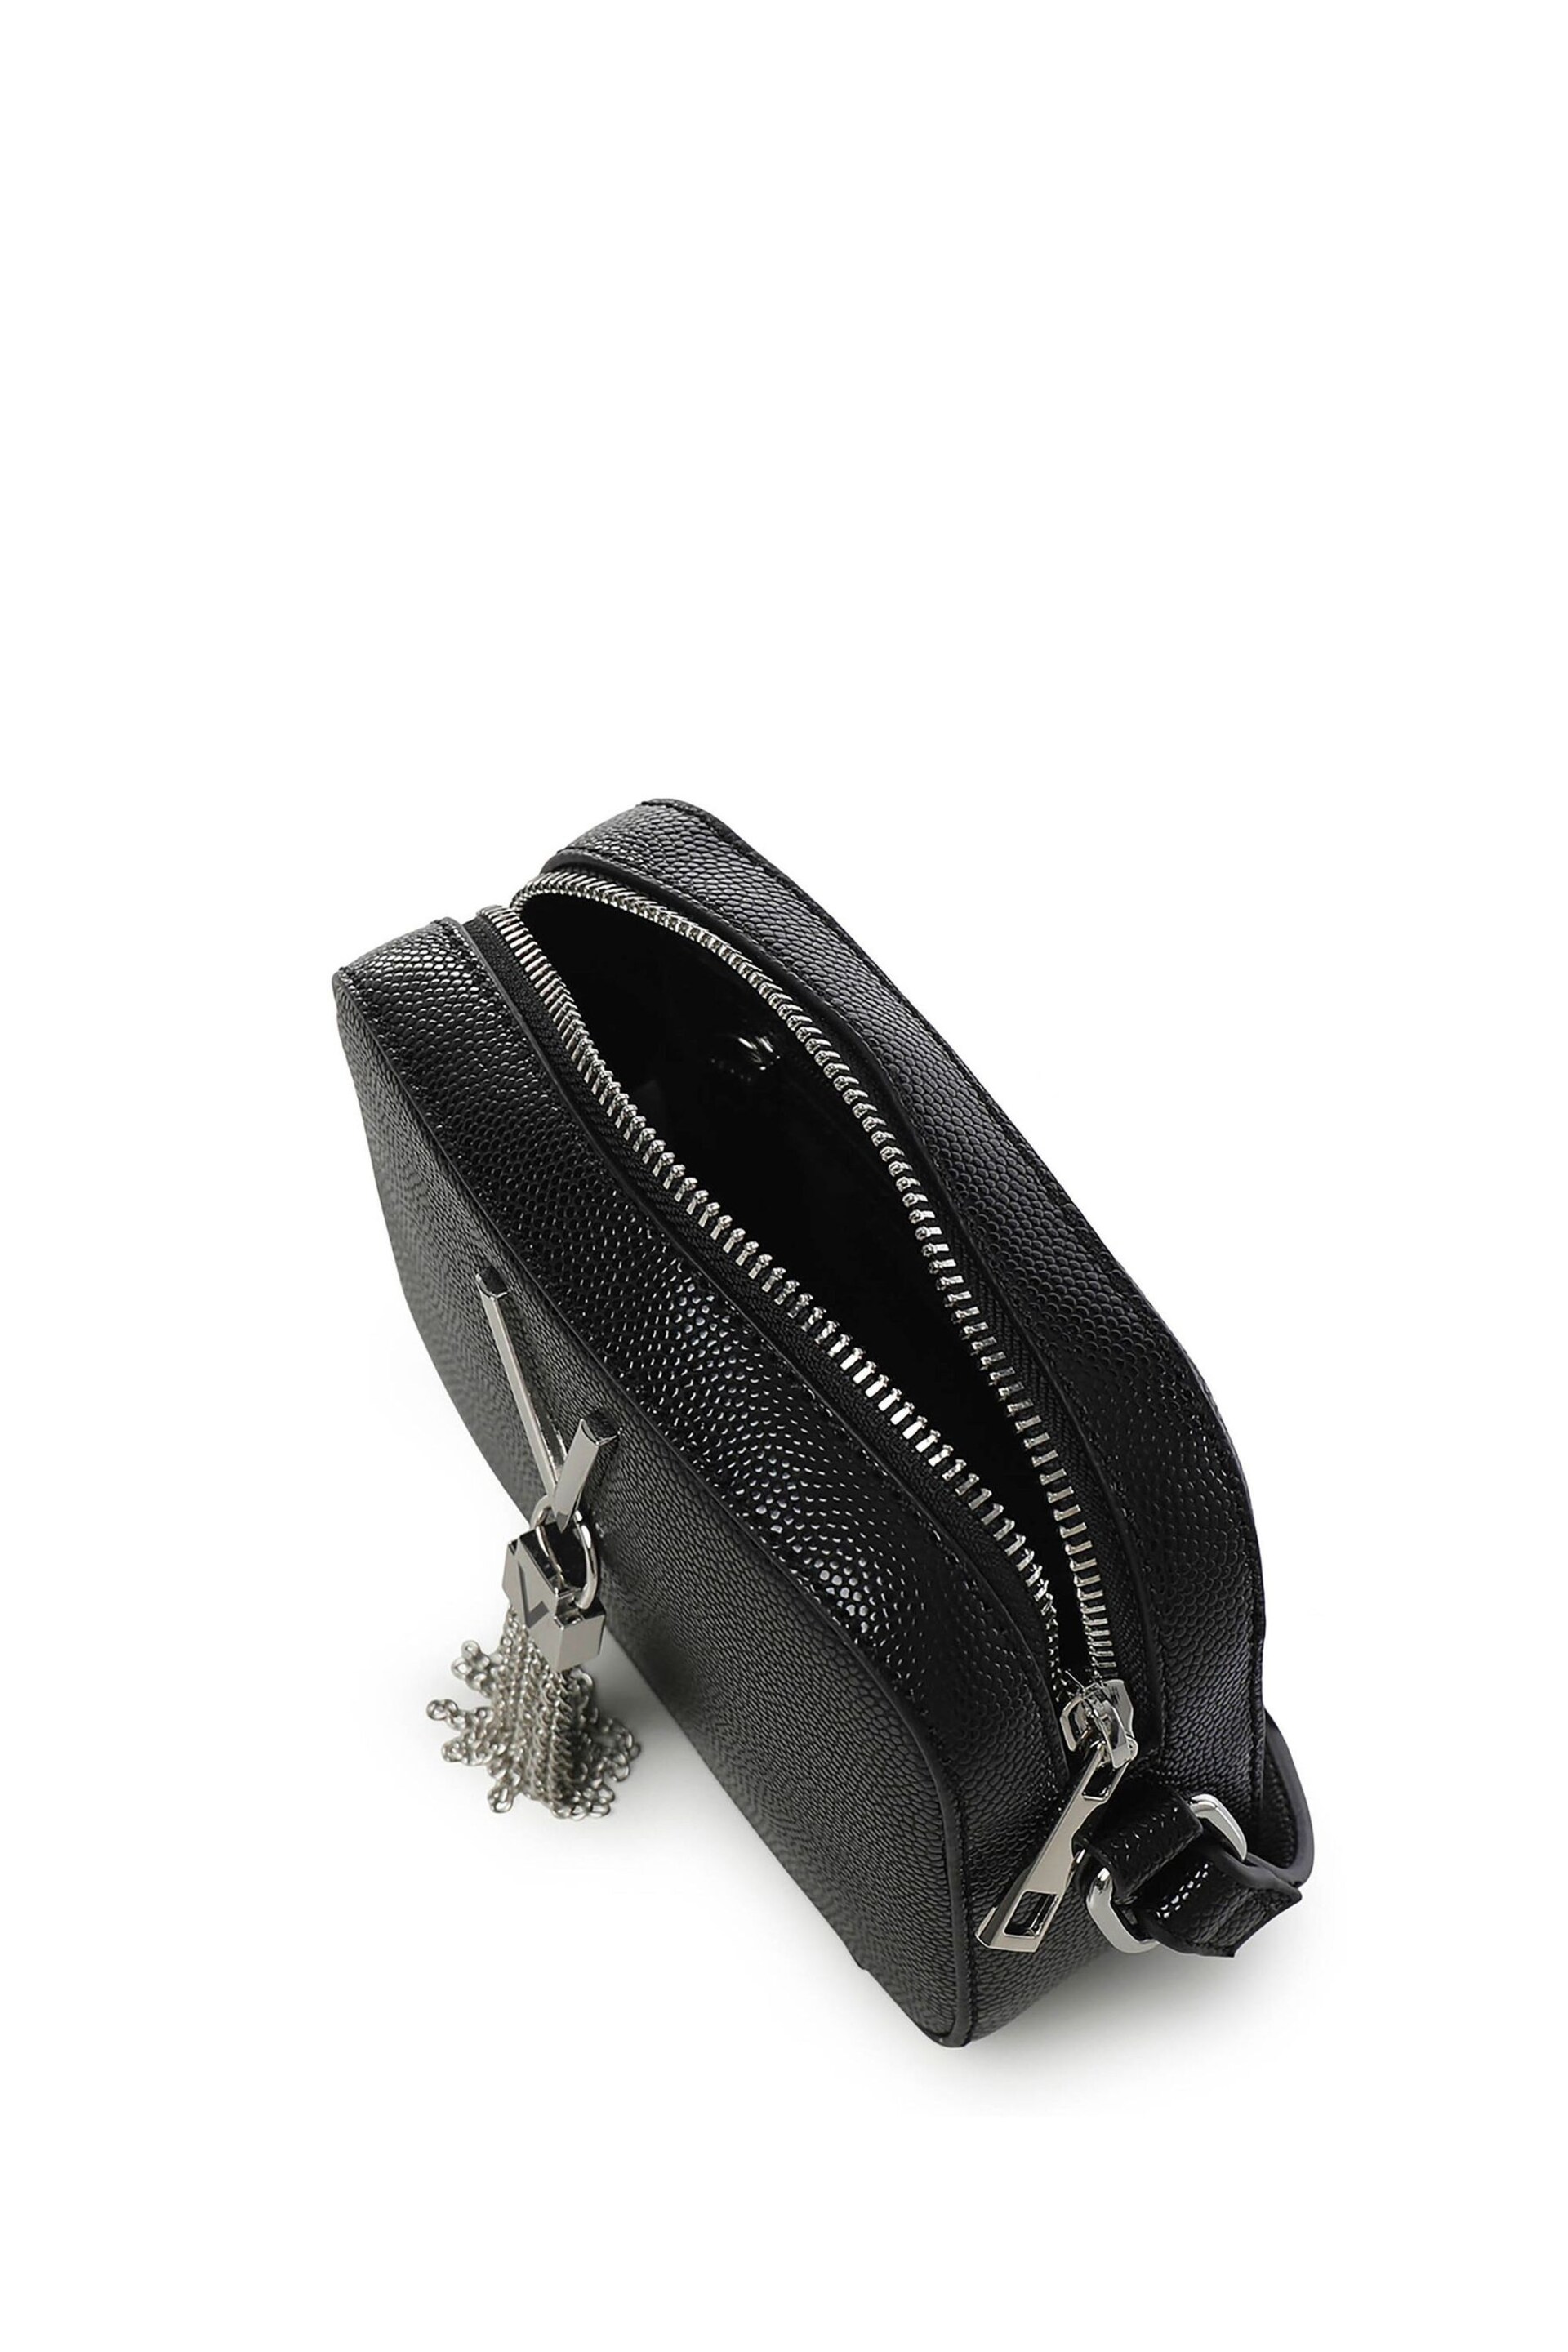 Valentino Bags Black Divina Crossbody Camera Bag - Image 3 of 3